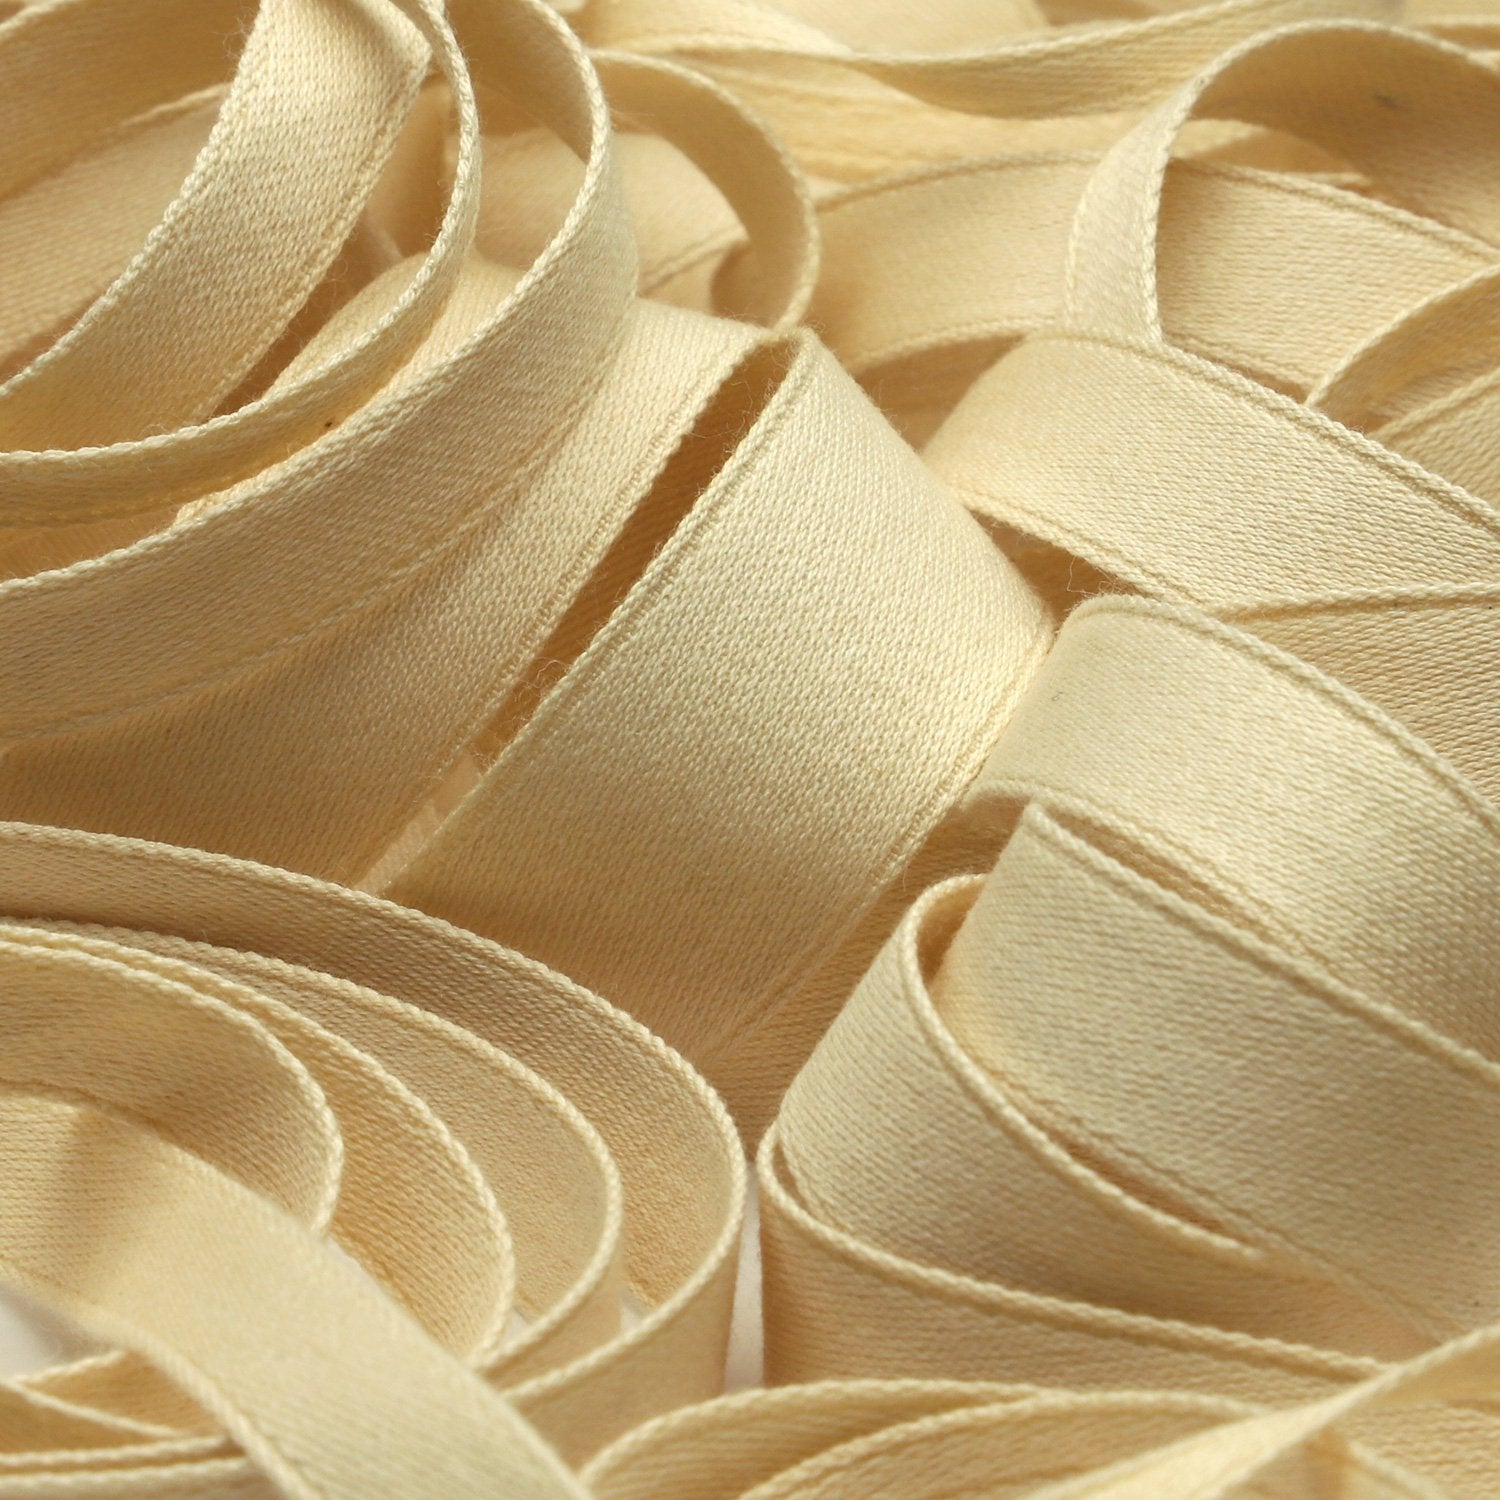 FUJIYAMA RIBBON Organic Cotton Double-Face Satin Ribbon 12mm Ecru 9.14 Meters Roll